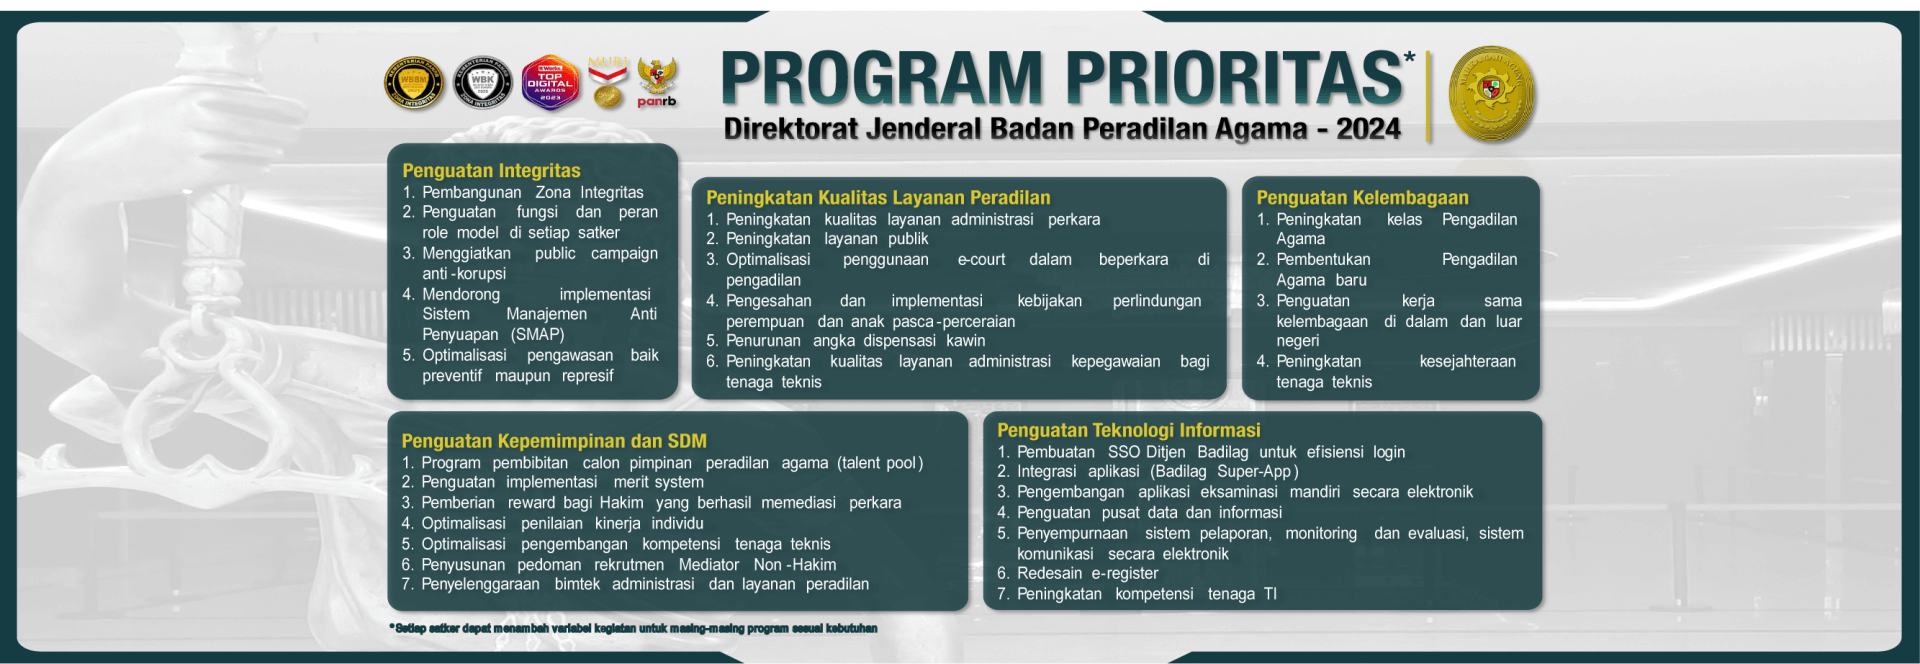 Banner Program Prioritas Badilag 2024